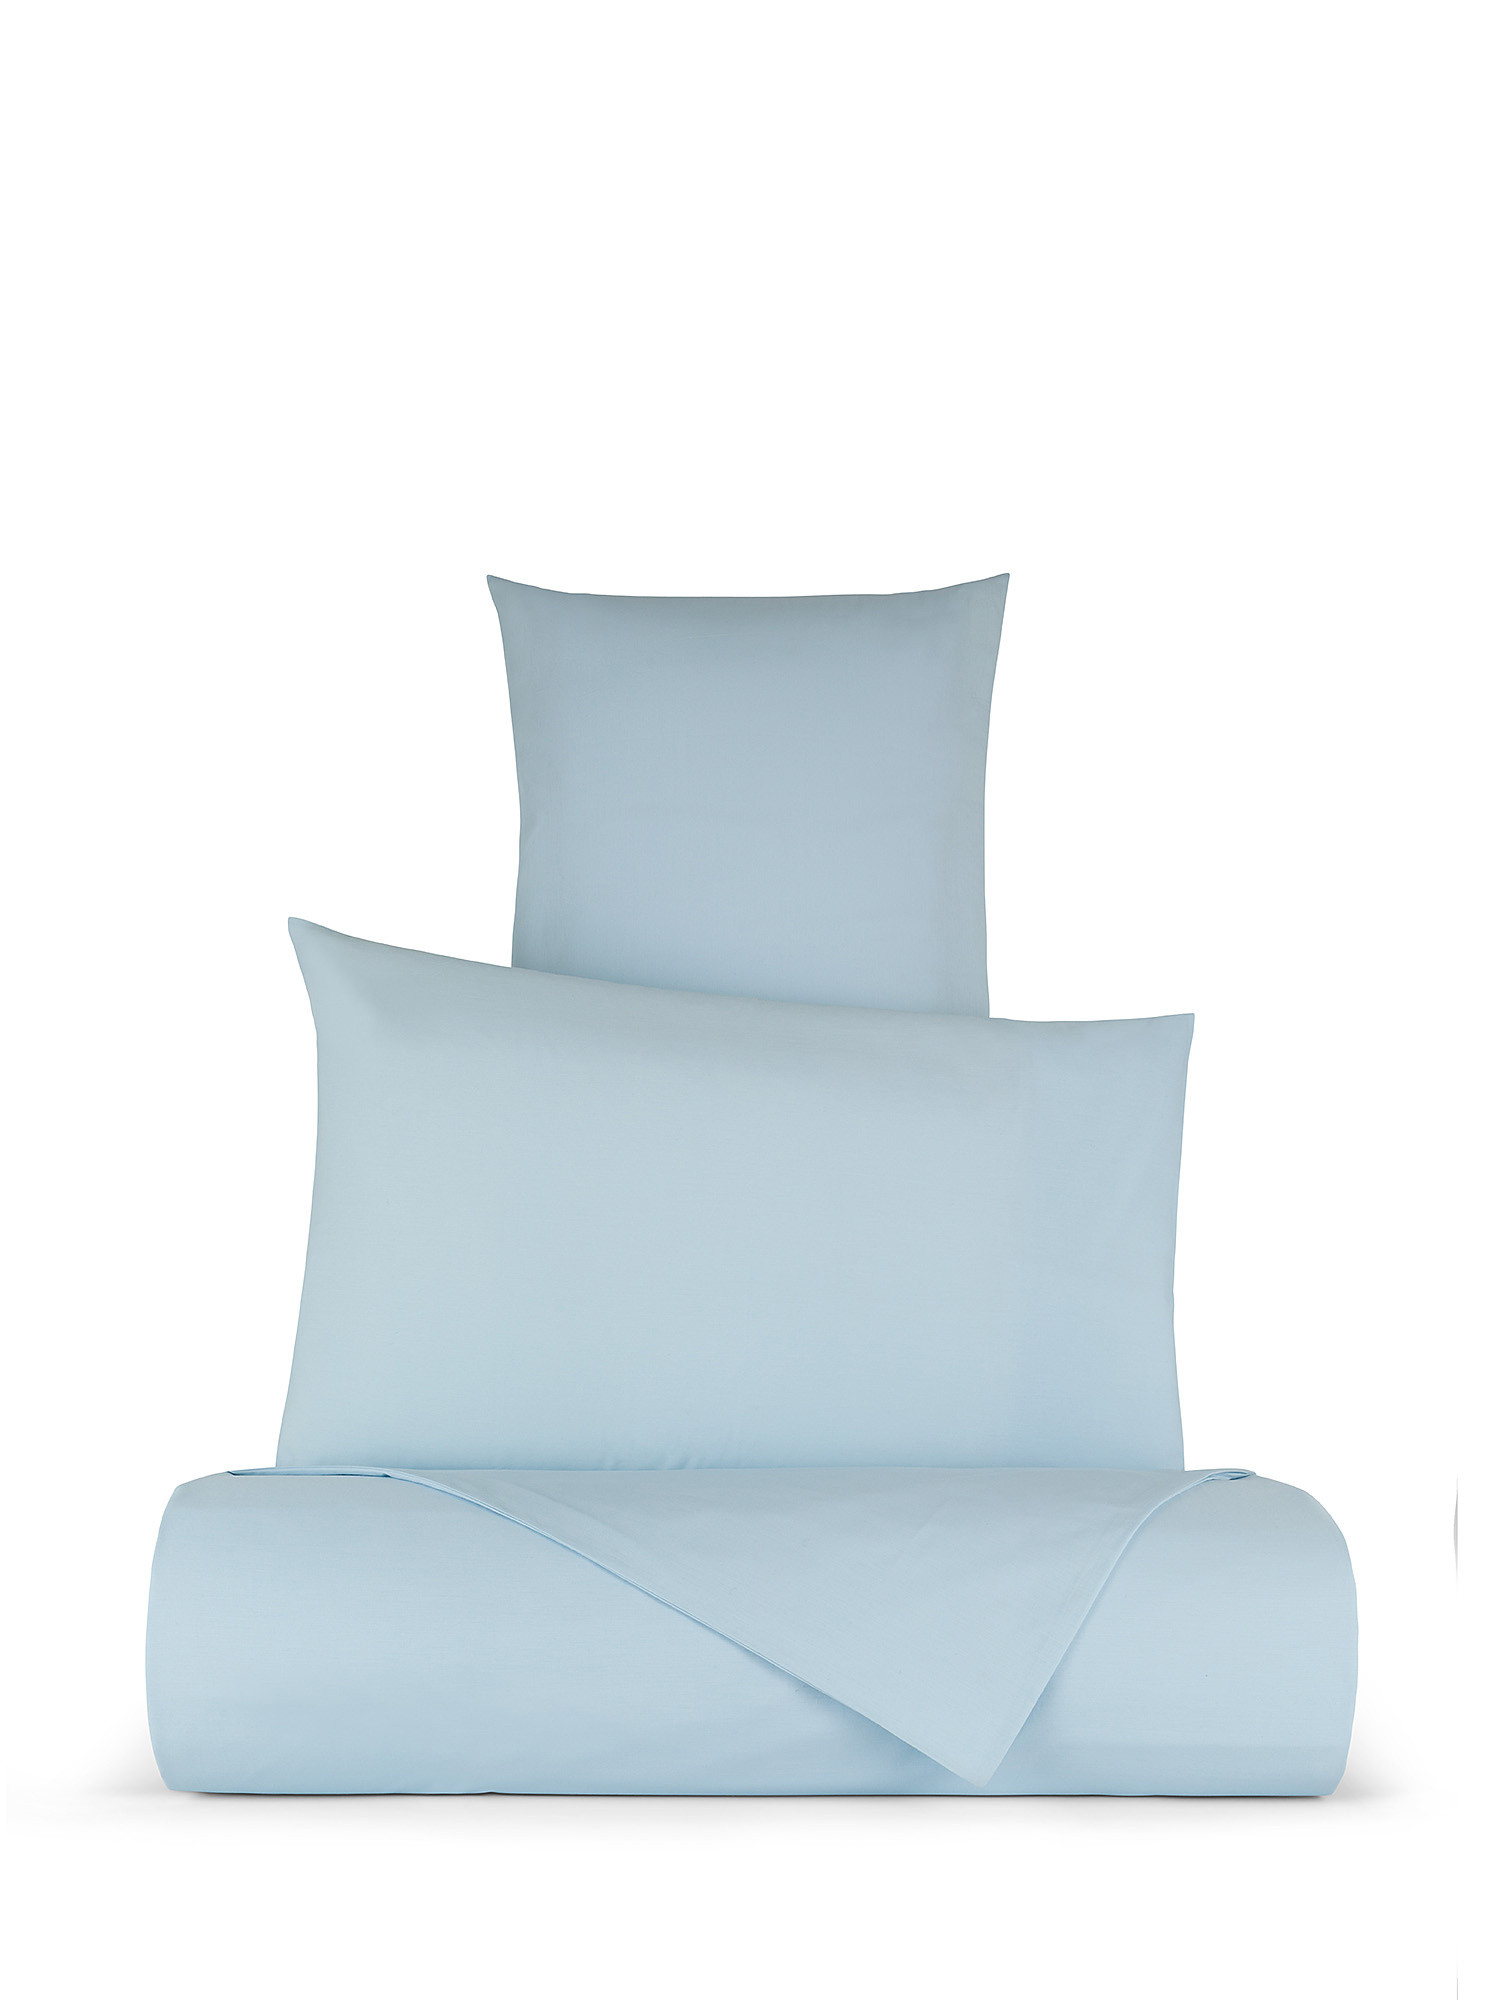 Solid color percale cotton duvet cover set, Light Blue, large image number 0